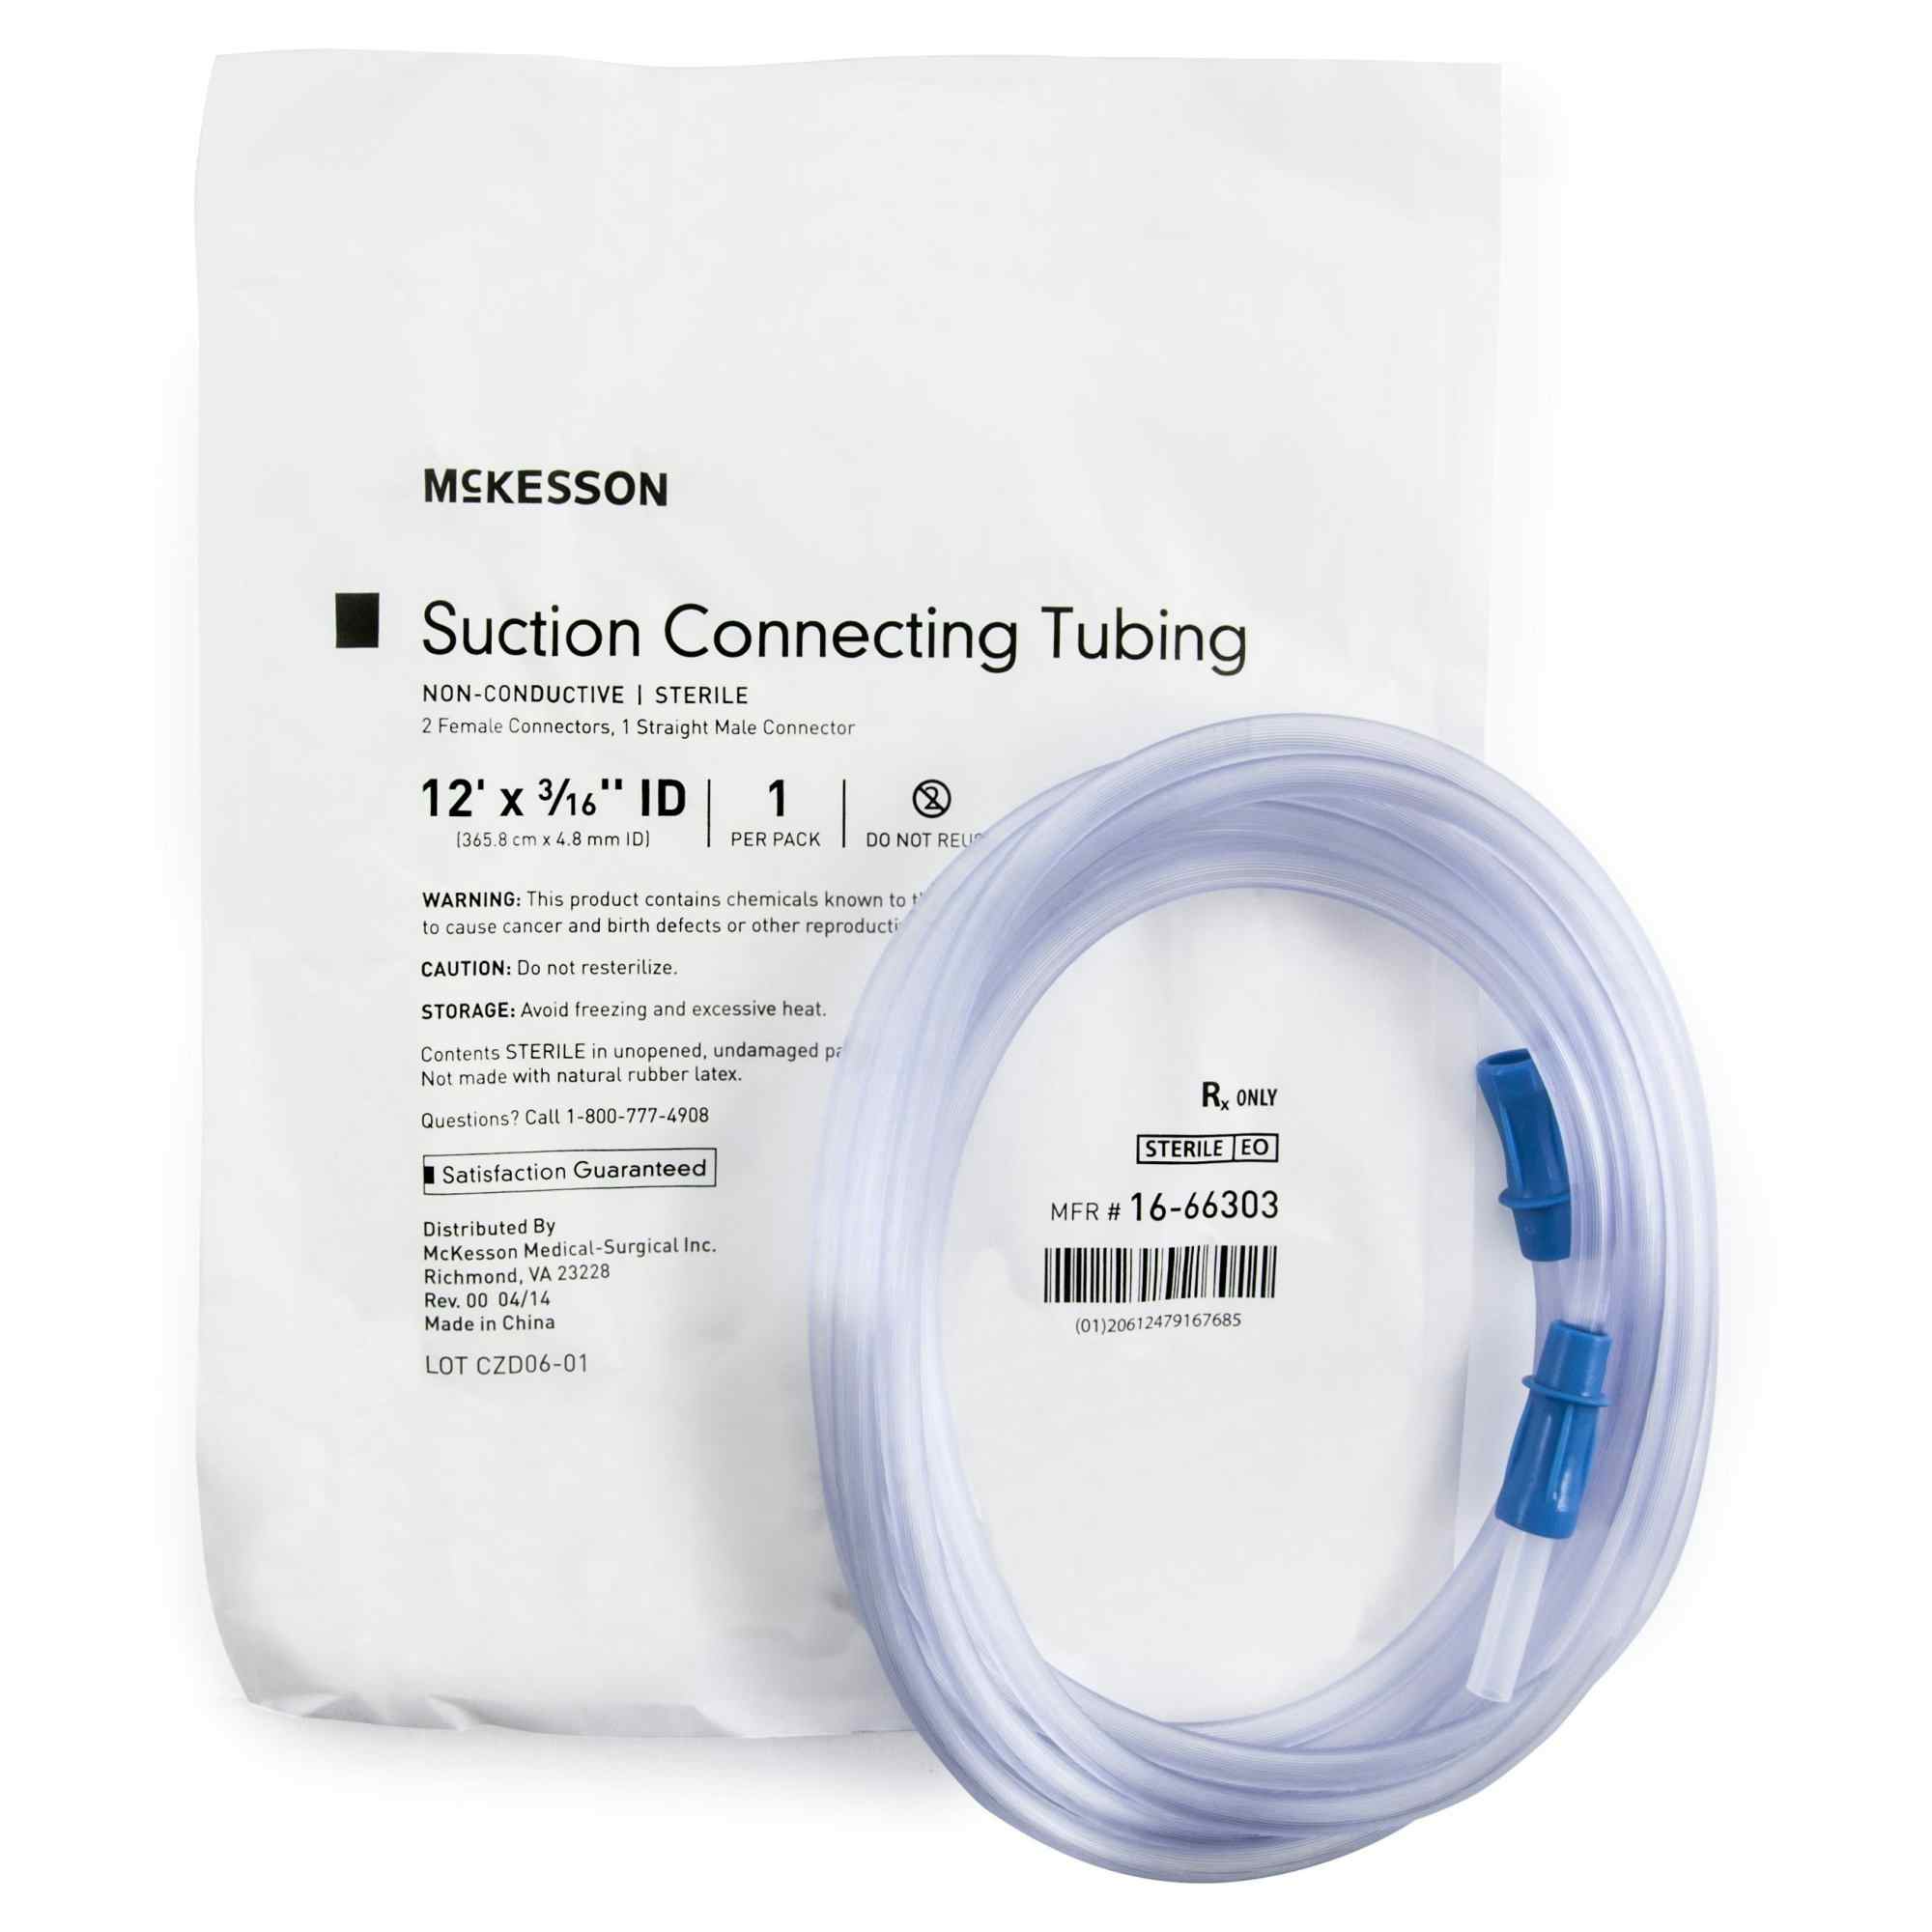 McKesson Suction Connecting Tube, Non-Conductive, 3/16" ID, 16-66303, 12' - Case of 20